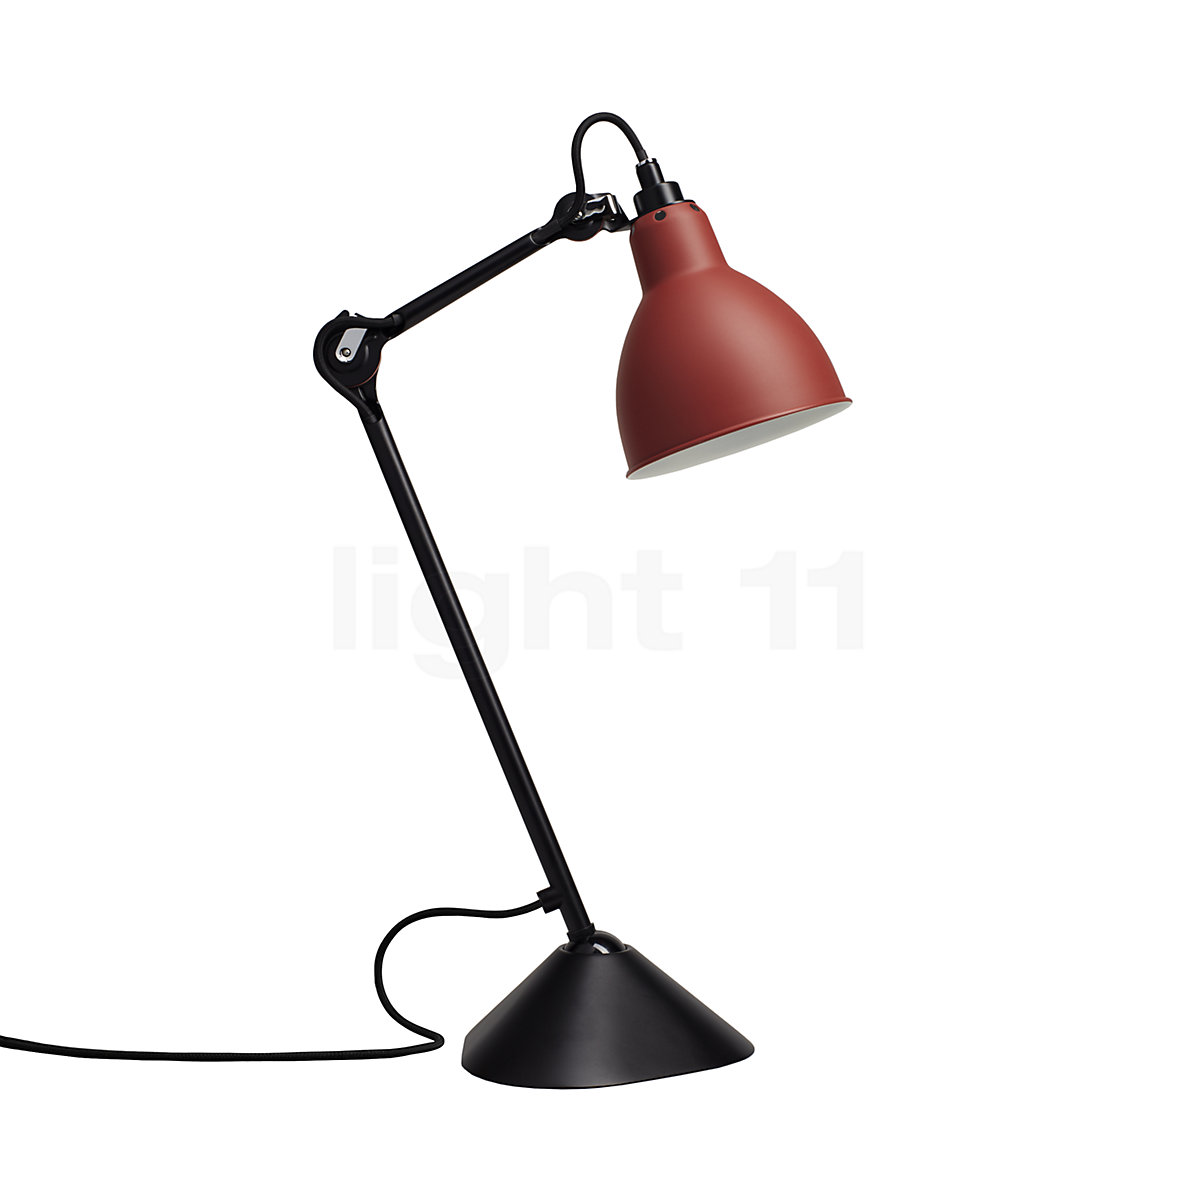 Buy DCW Lampe Gras No 205 Table lamp black at light11.eu